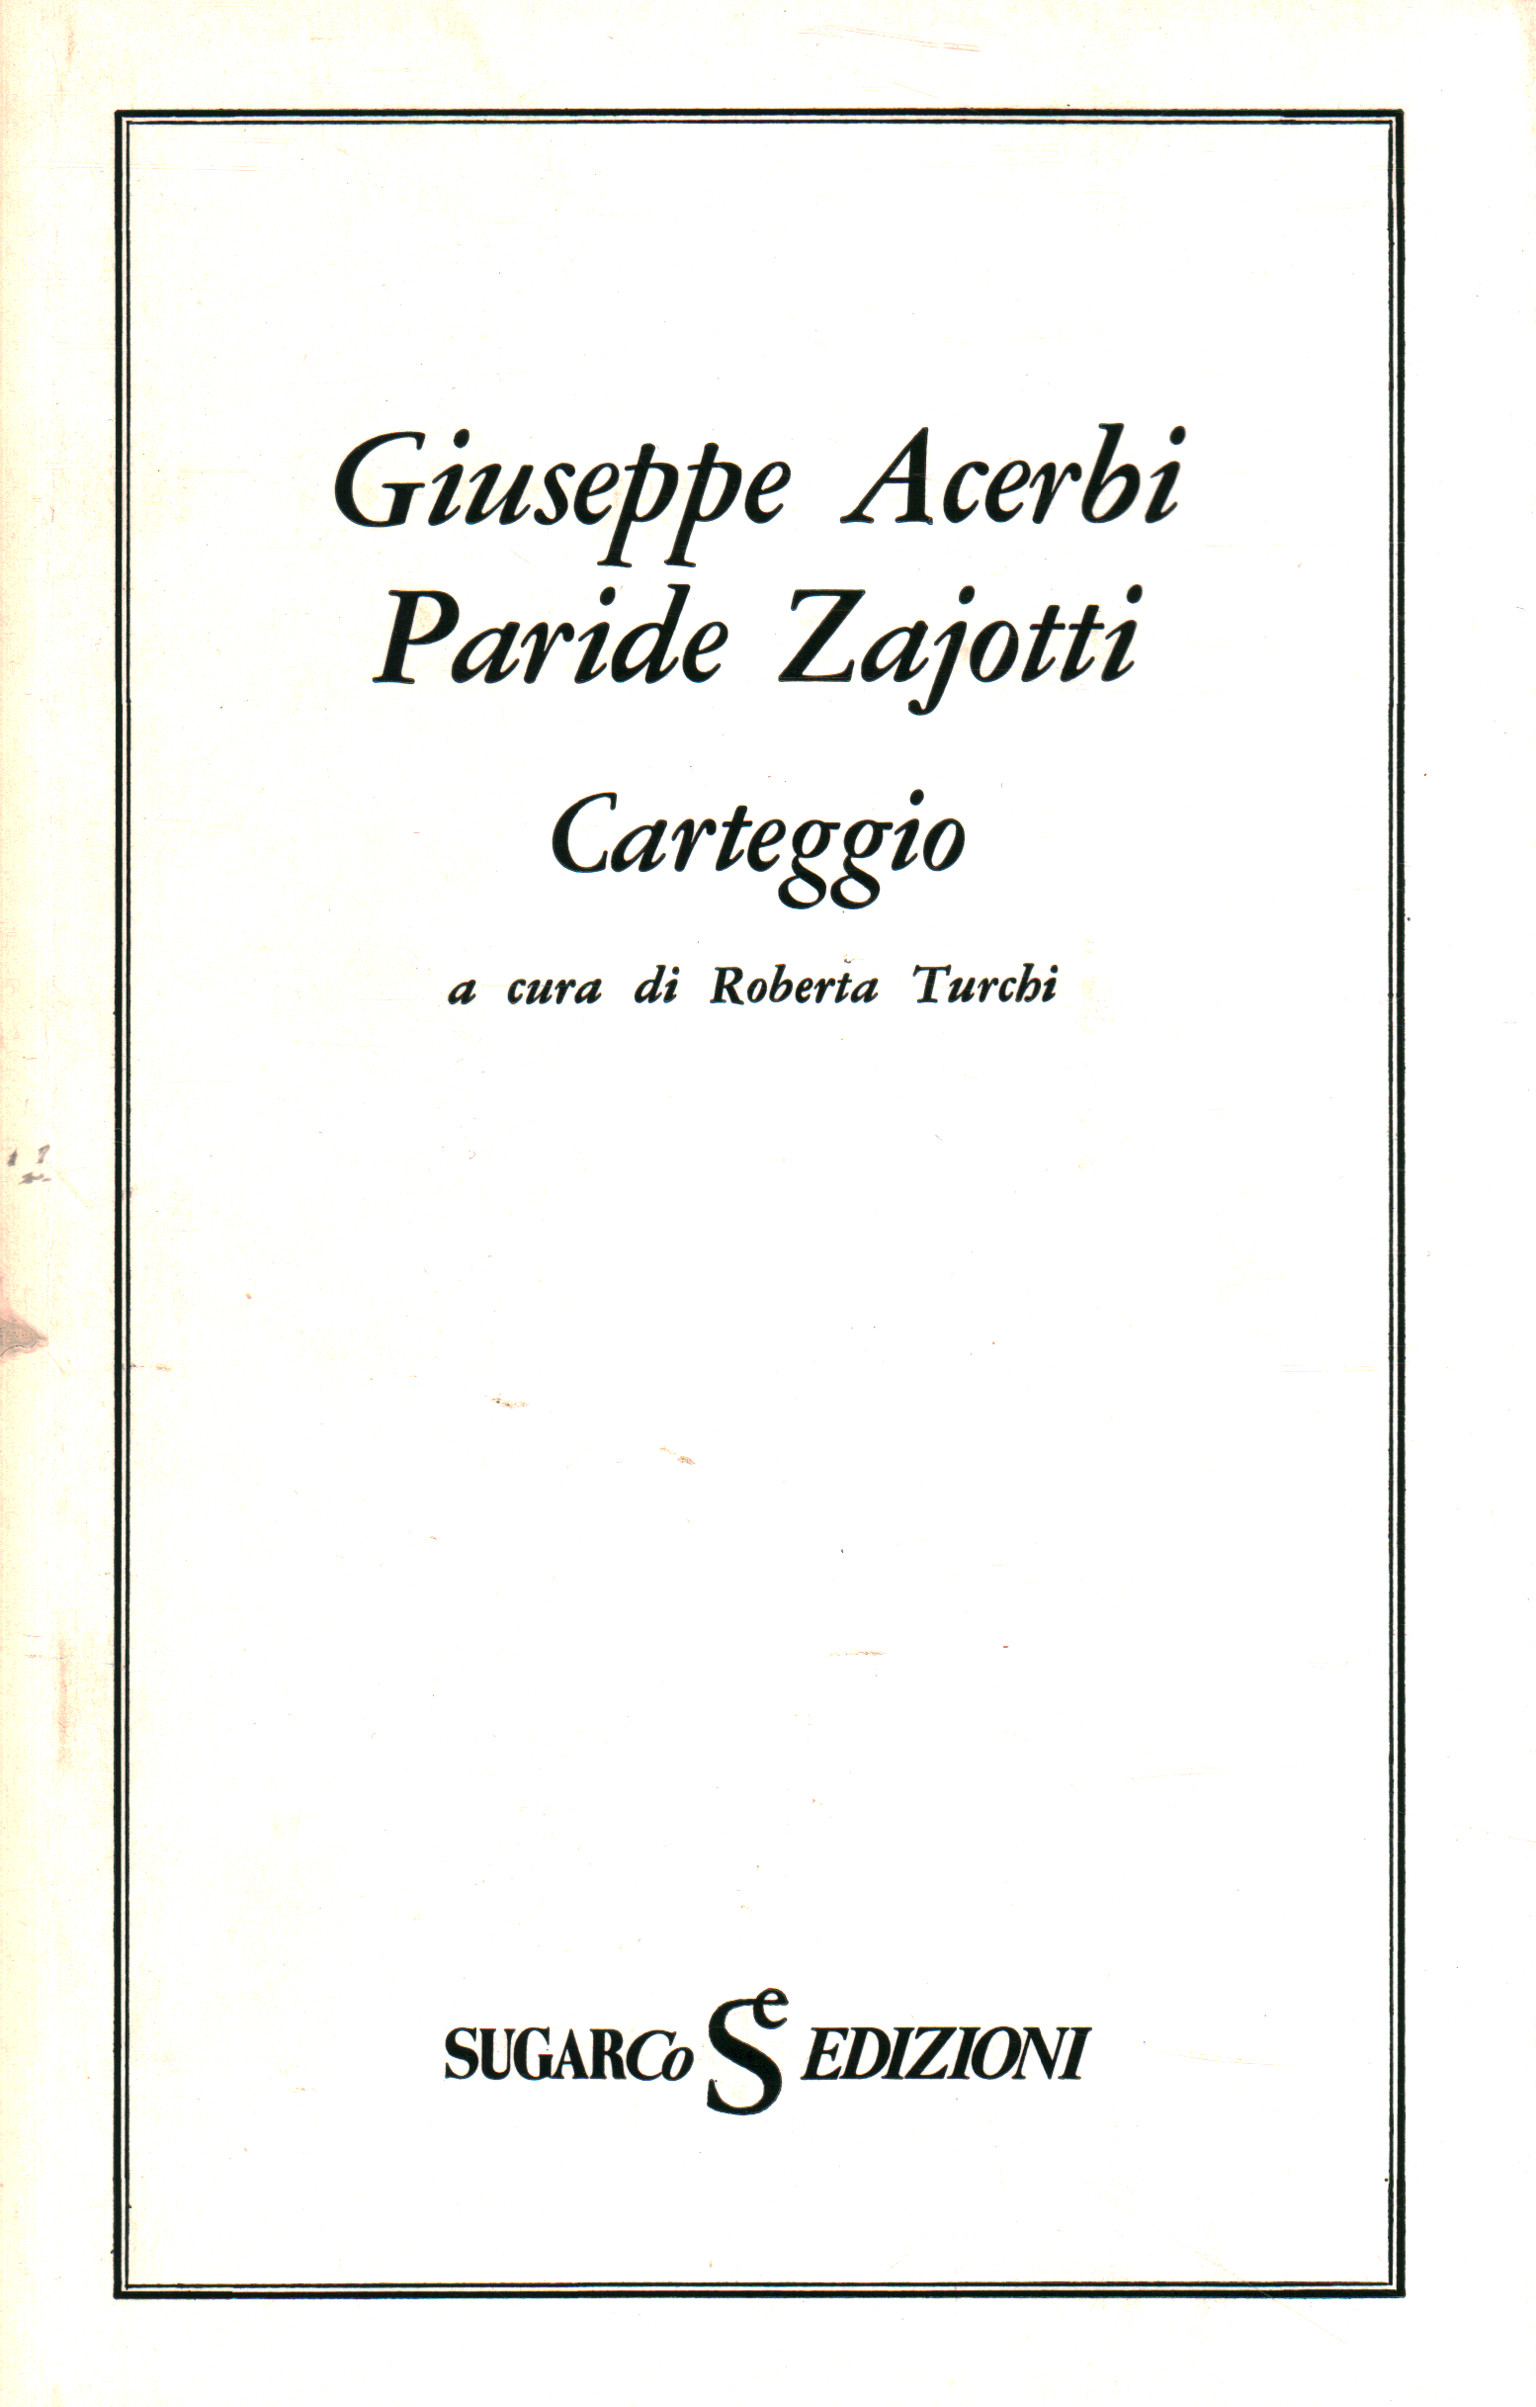 Carteggio, Giuseppe Acerbi Paride Zajotti